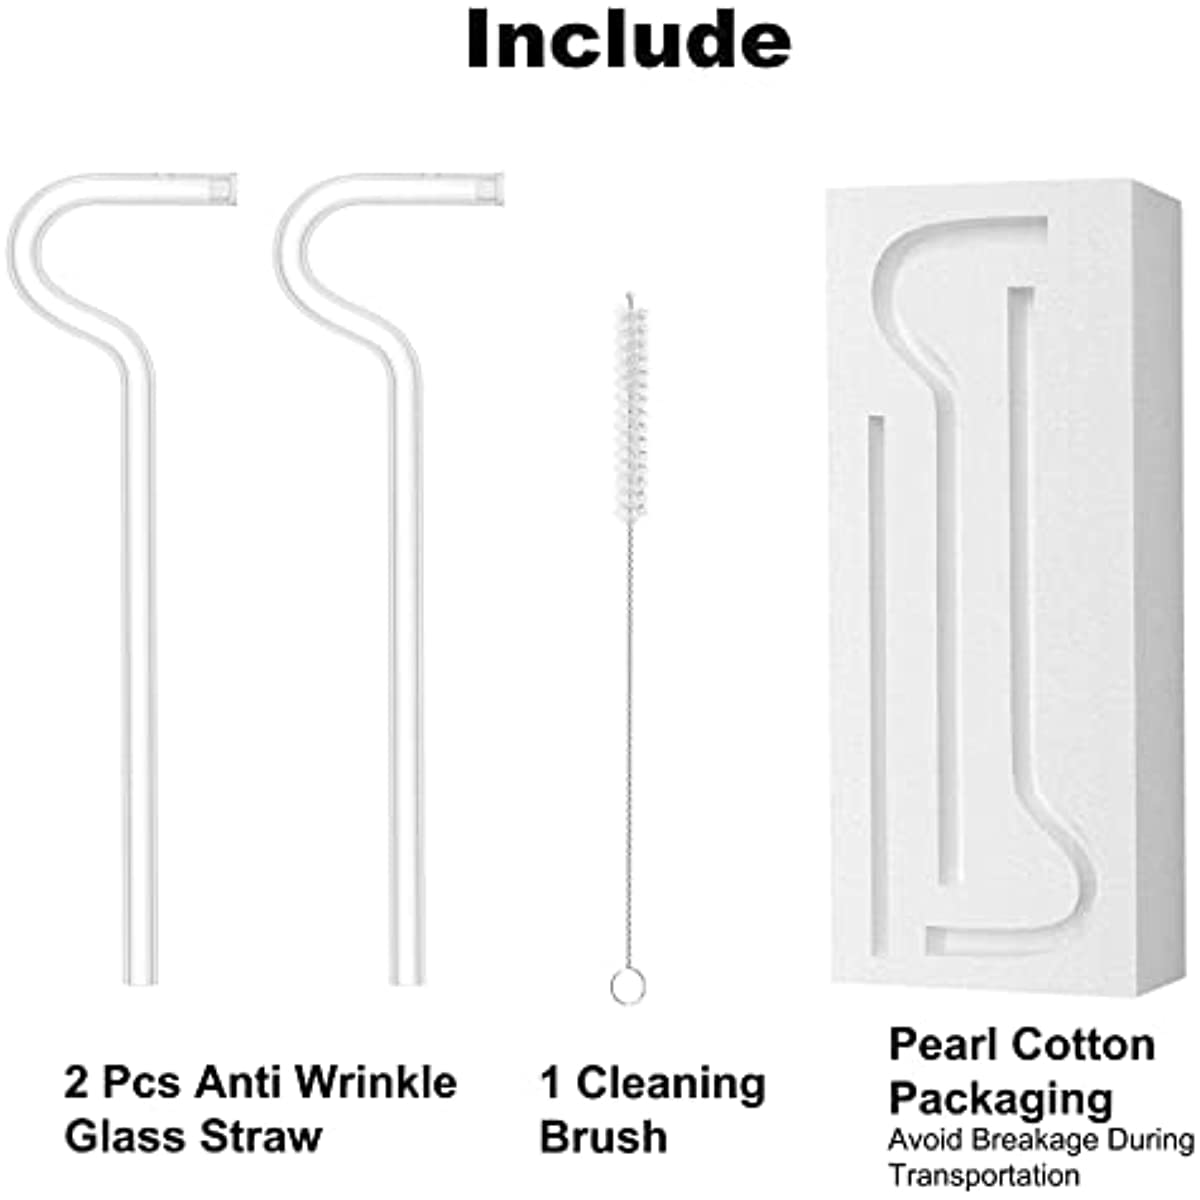  Anti Wrinkle Straw, Reusable Anti Wrinkle Drinking Straw Glass  Straw, Lip Straw for Wrinkles, Set of 2 Anti Lip Wrinkle Straw and 1 brush  : Home & Kitchen